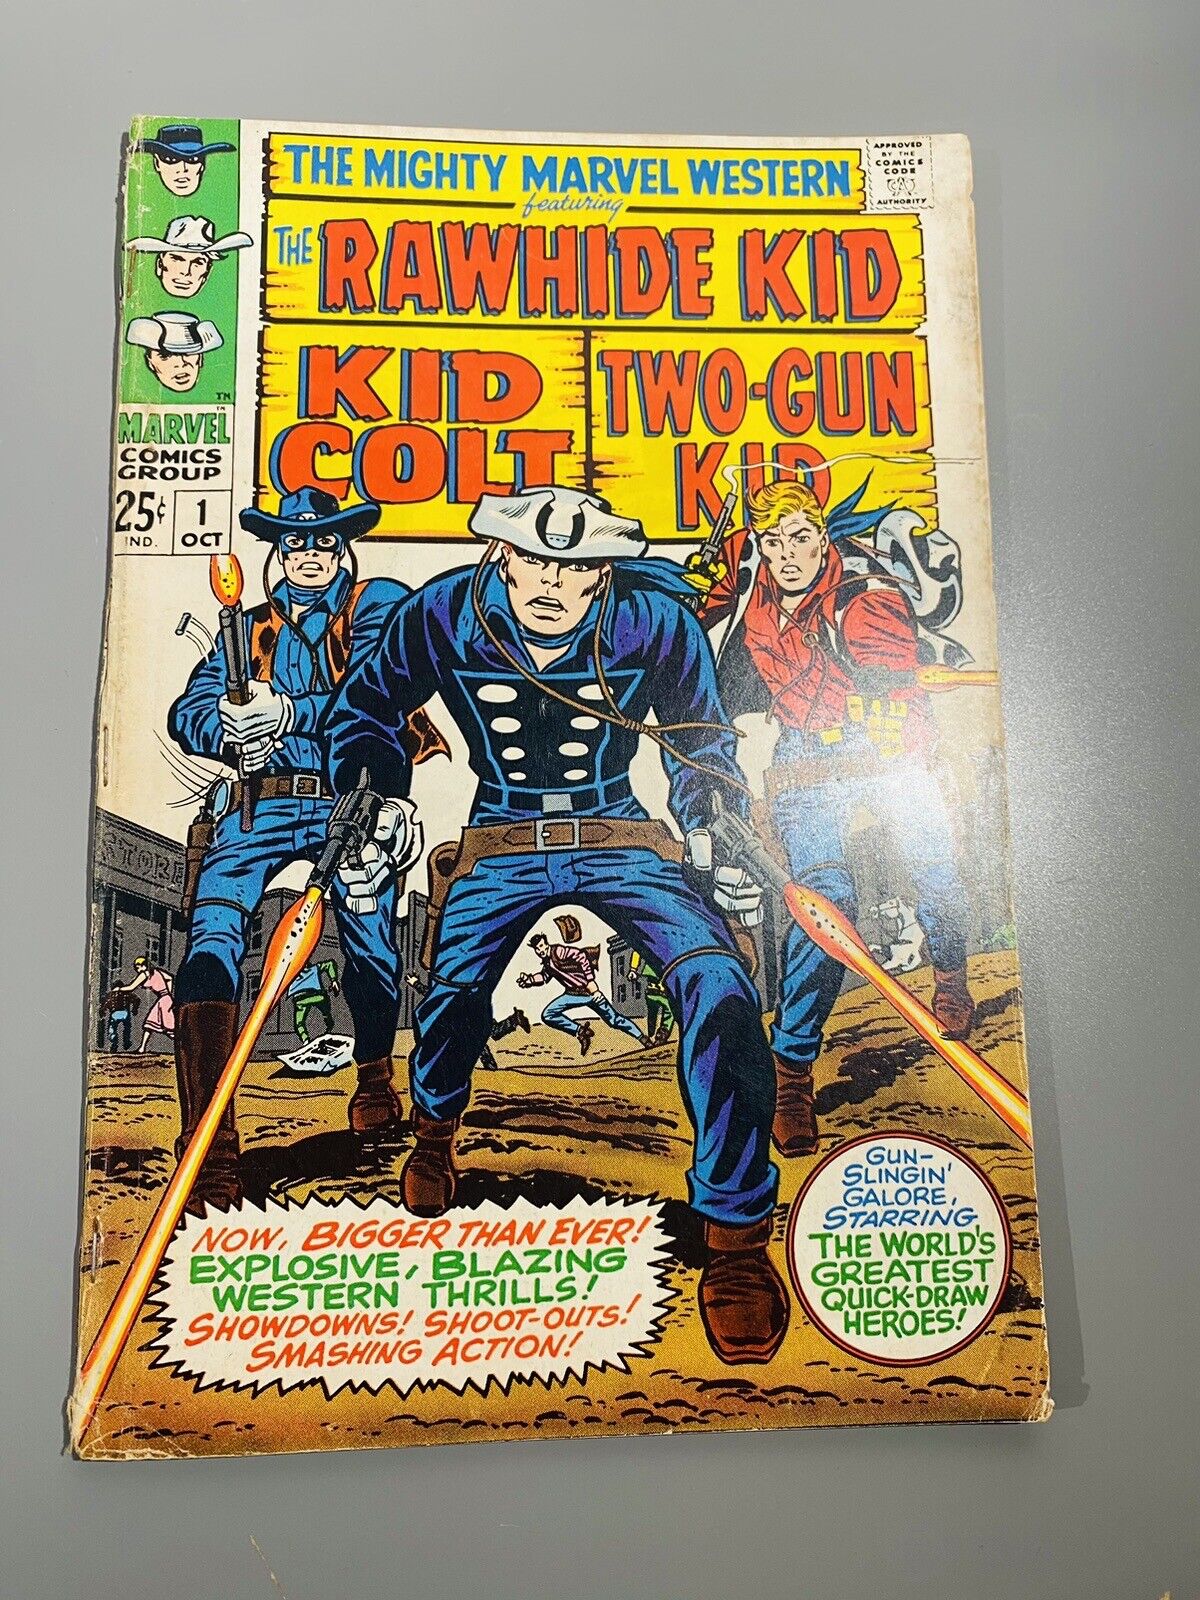 MIGHTY MARVEL WESTERN # 1 OCT 1968, RAWHIDE KID KID COLT TWO-GUN KID KIRBY